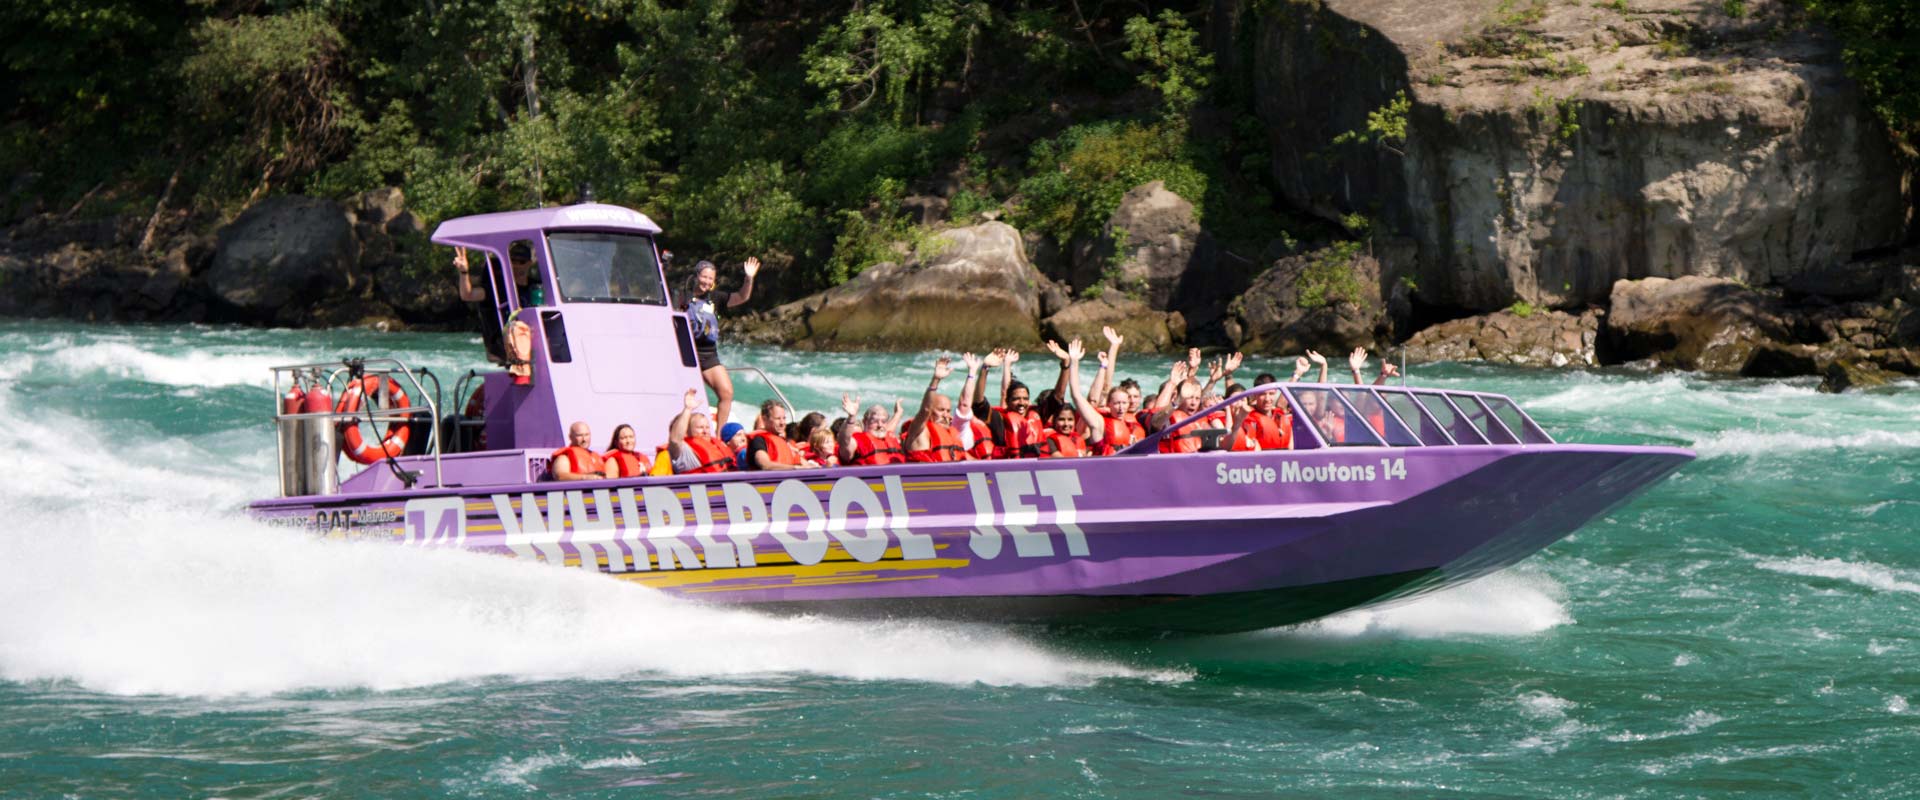 Niagara boat falls jet whirlpool ontario tours trekaroo nearby hotel lake deals